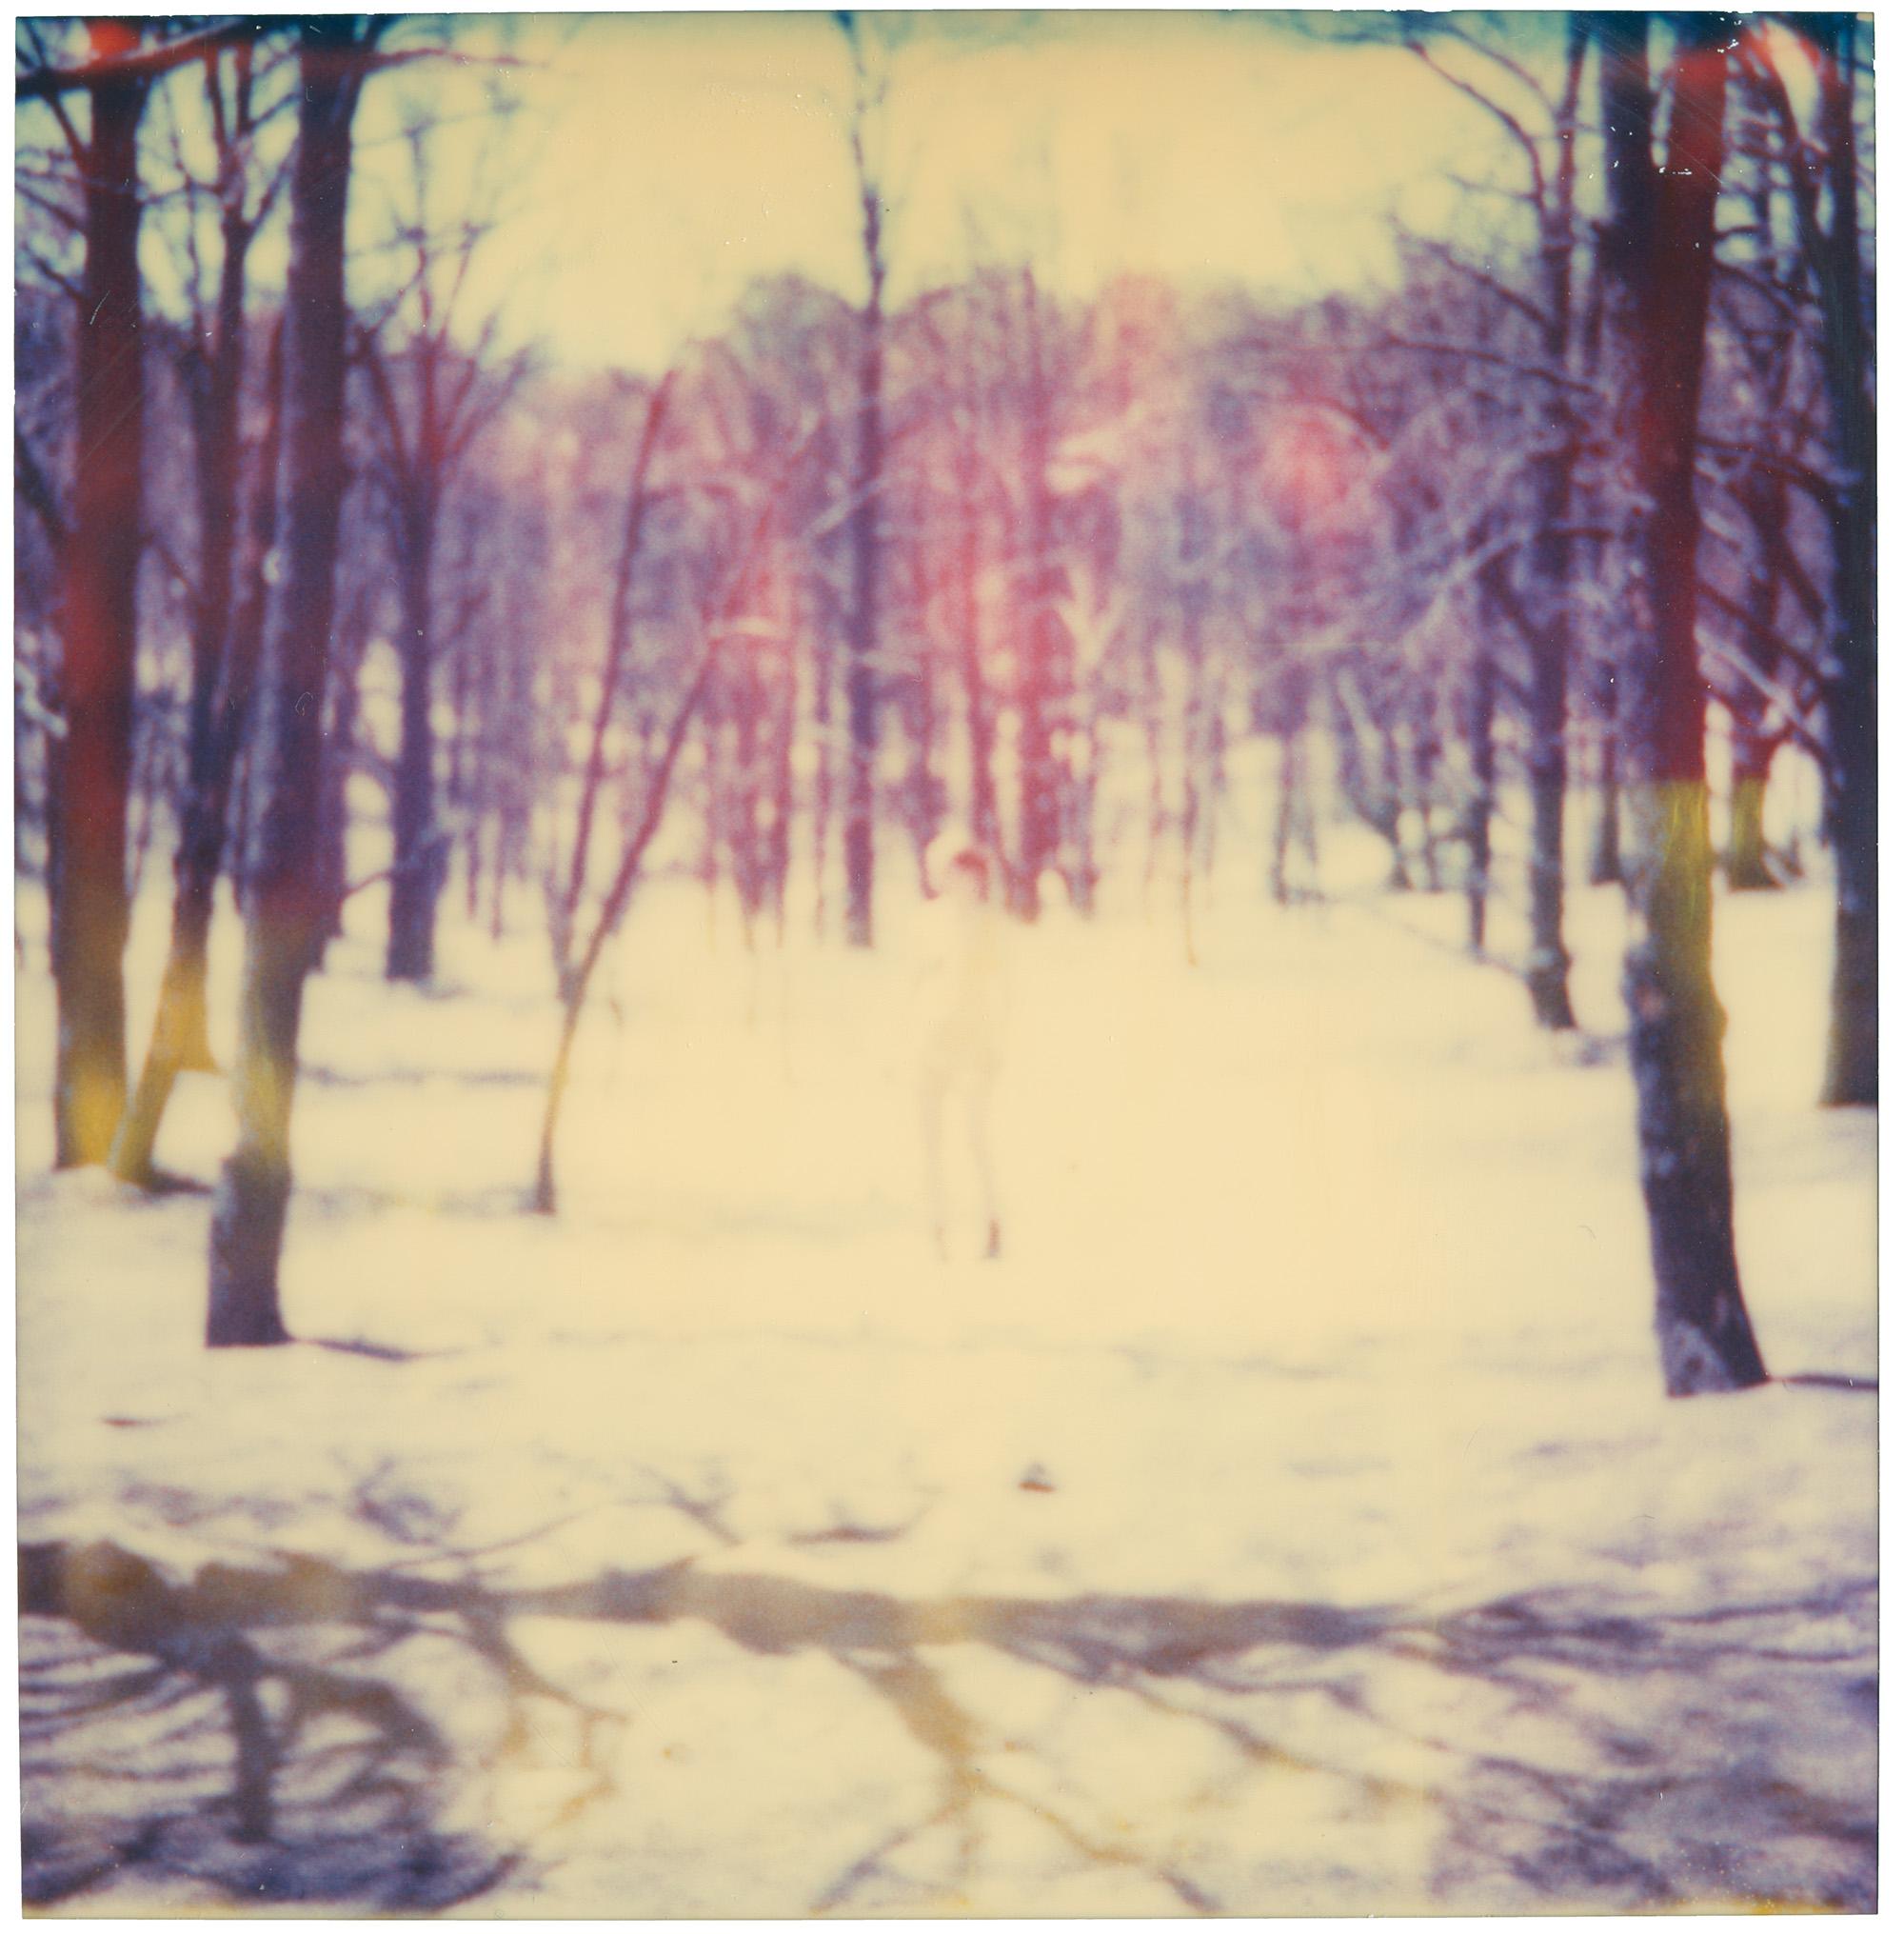 Stefanie Schneider Landscape Photograph - Ghosts (The Last Picture Show) - Polaroid, Photograph, Contemporary, Americana